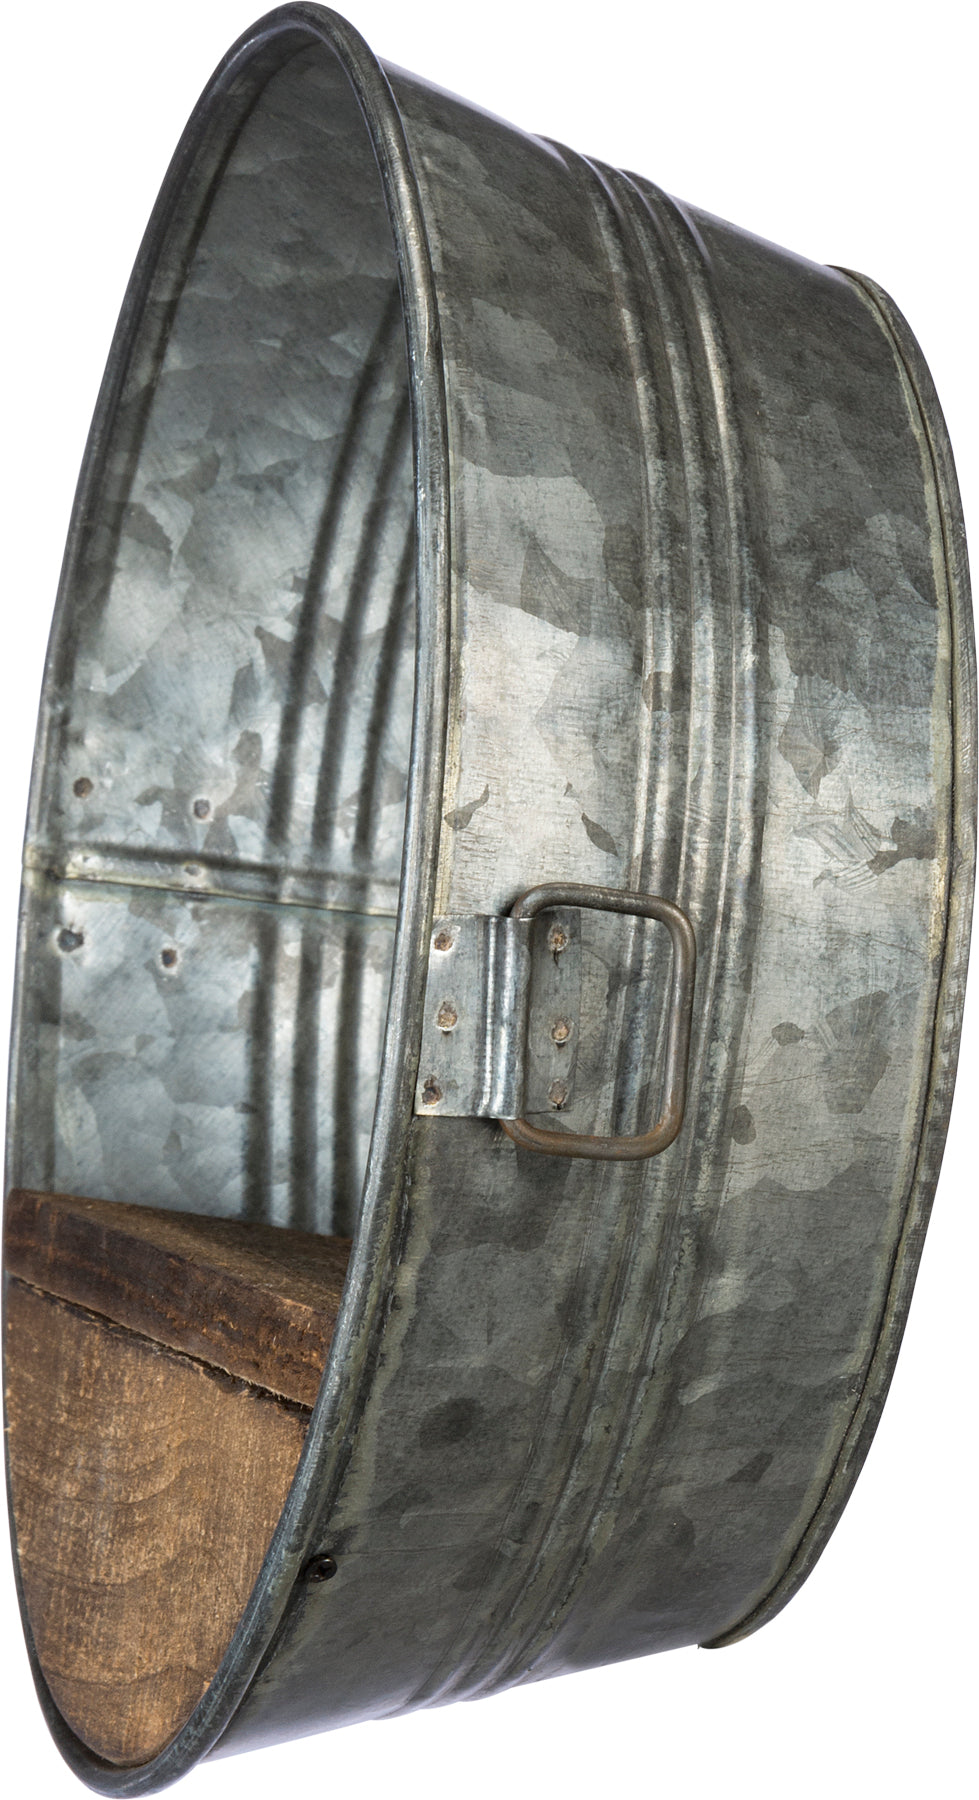 💙 Round Galvanized Pan with Wooden Shelf